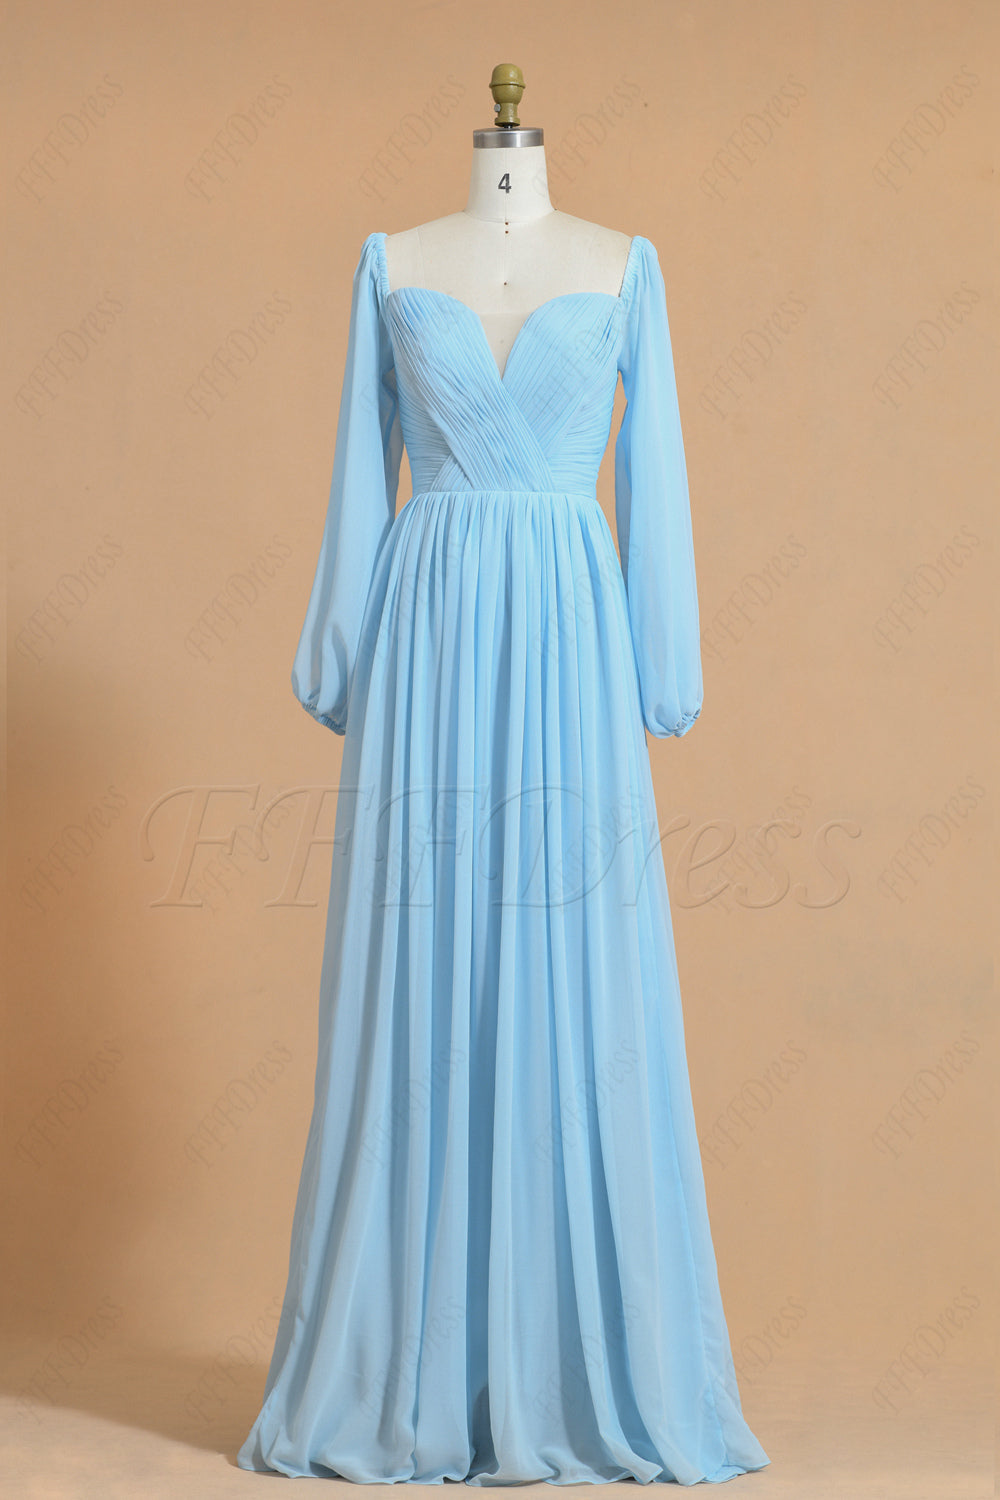 Porcelain Blue Chiffon Bridesmaid Dresses Long Sleeves